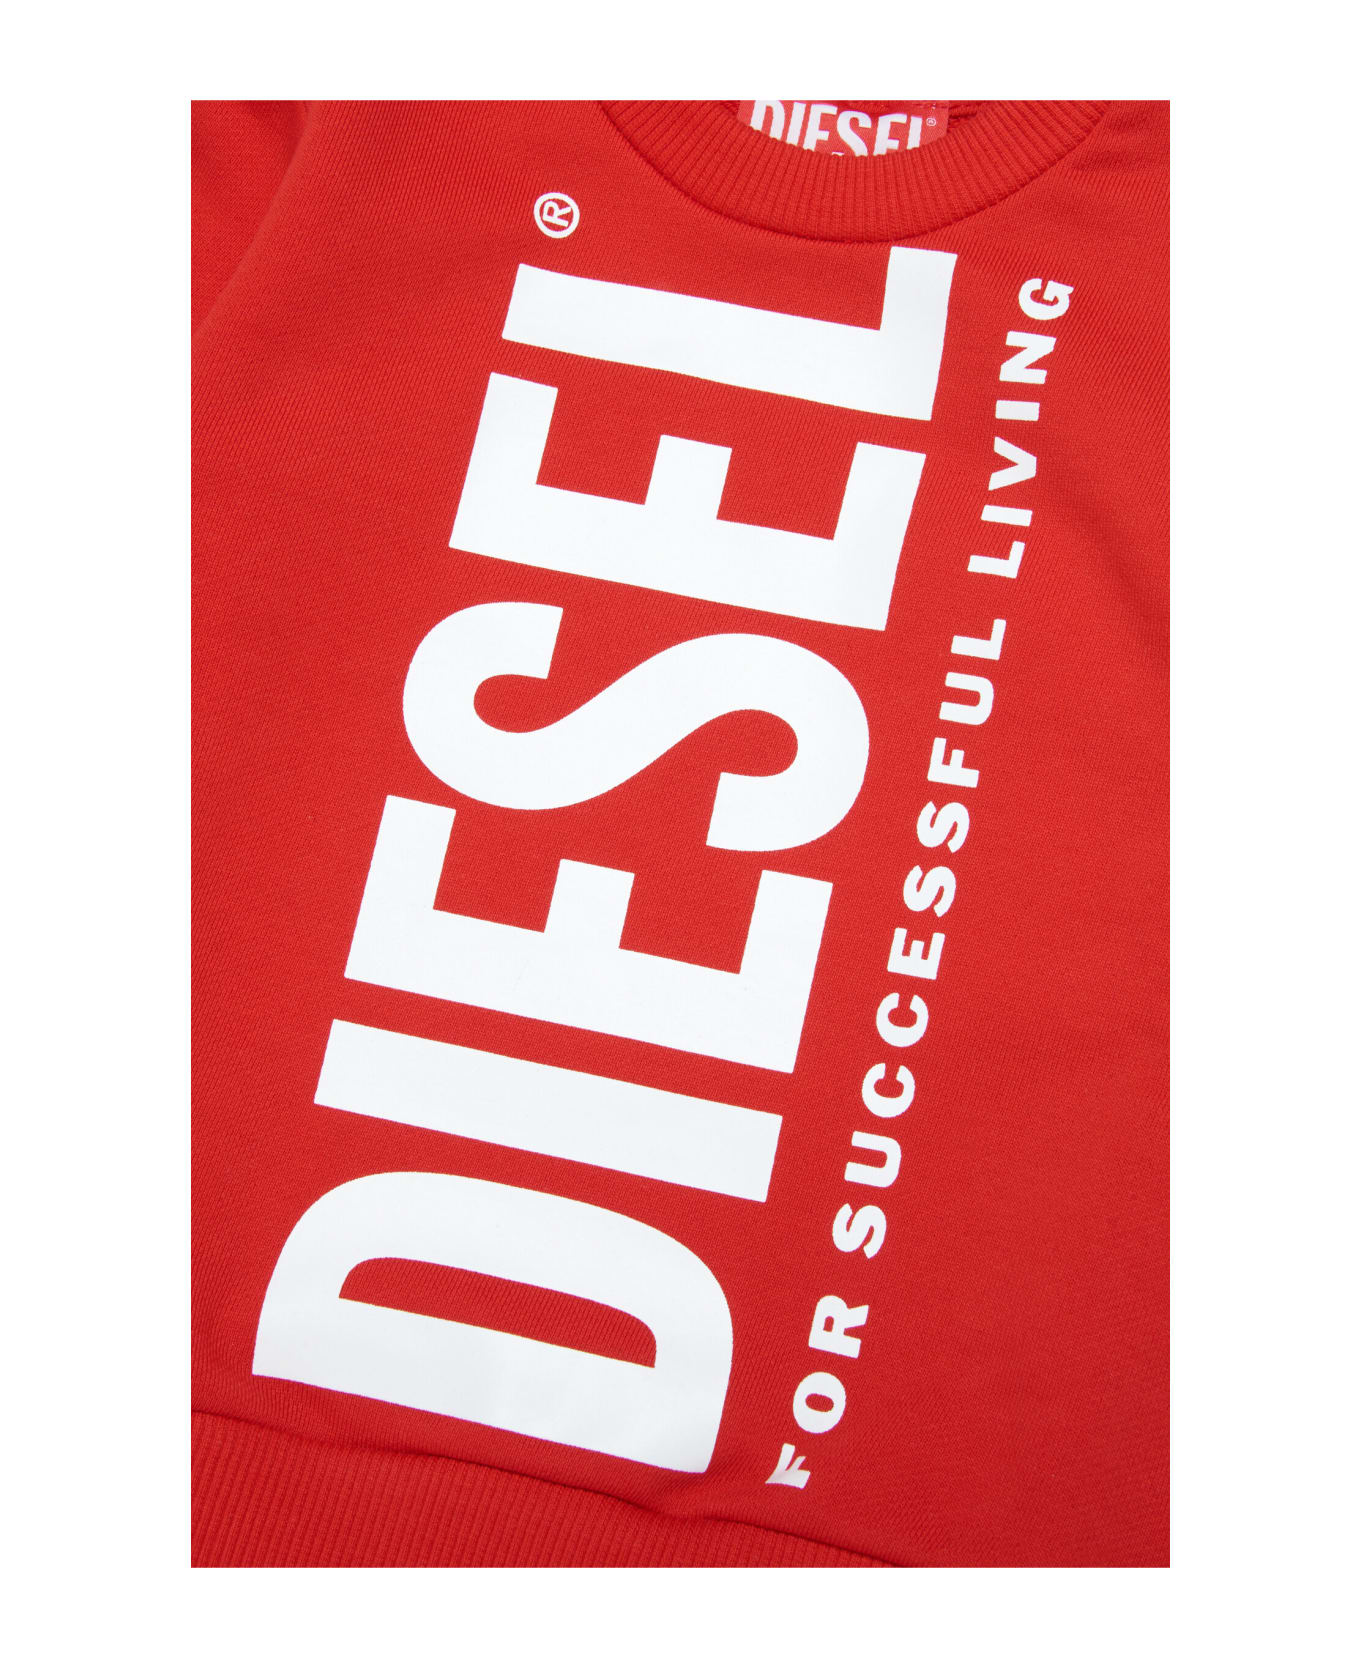 Diesel Sgonyb Sweat-shirt Diesel Red Crew-neck Cotton Sweatshirt With Extra-large Logo - Carnation red